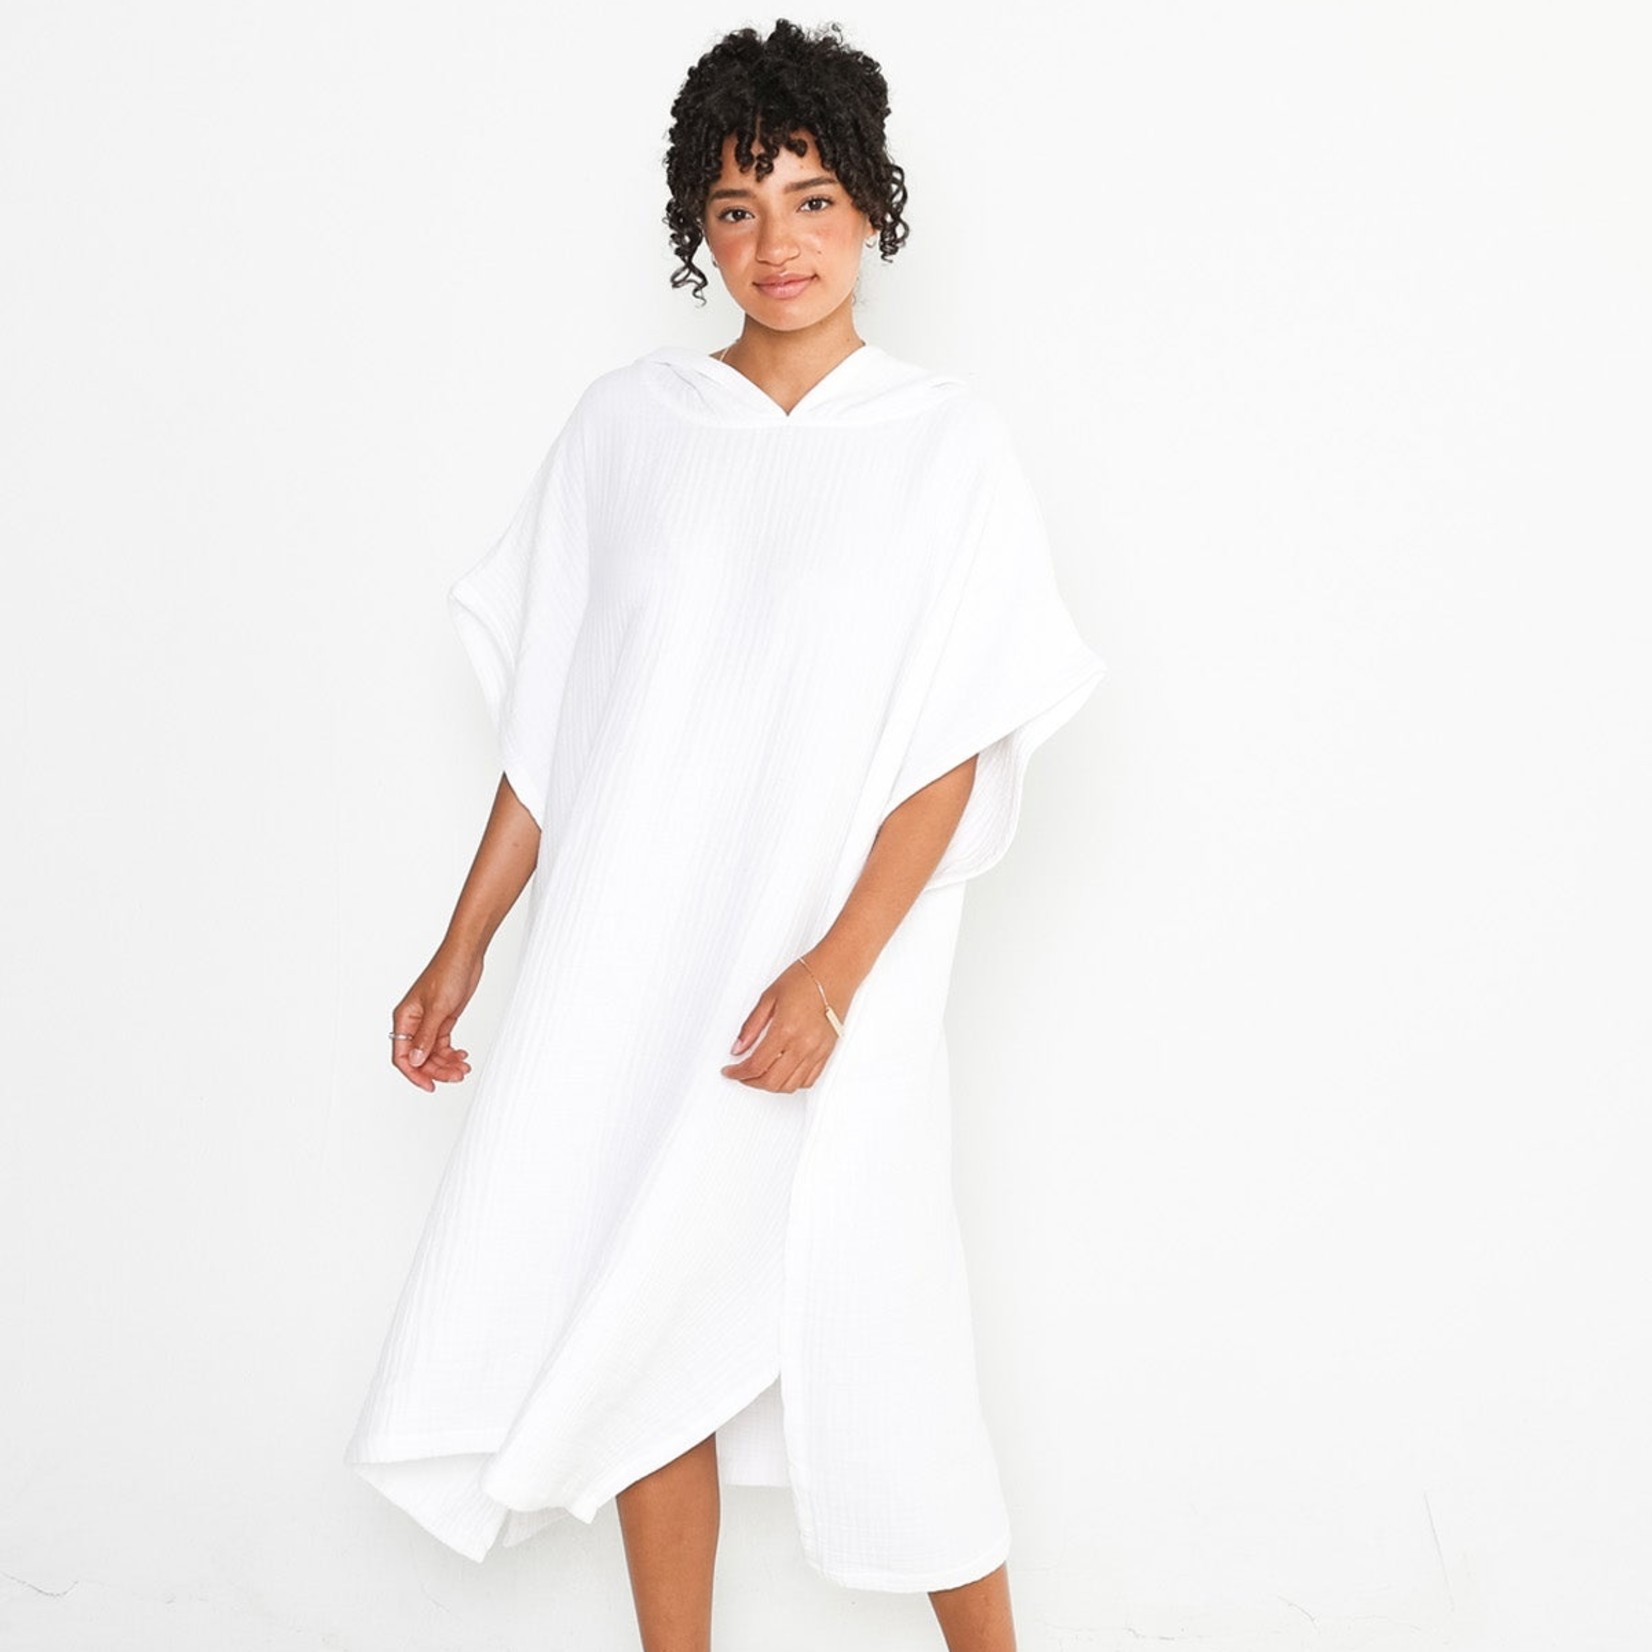 Tofino Towel Company Freedom Surf Poncho